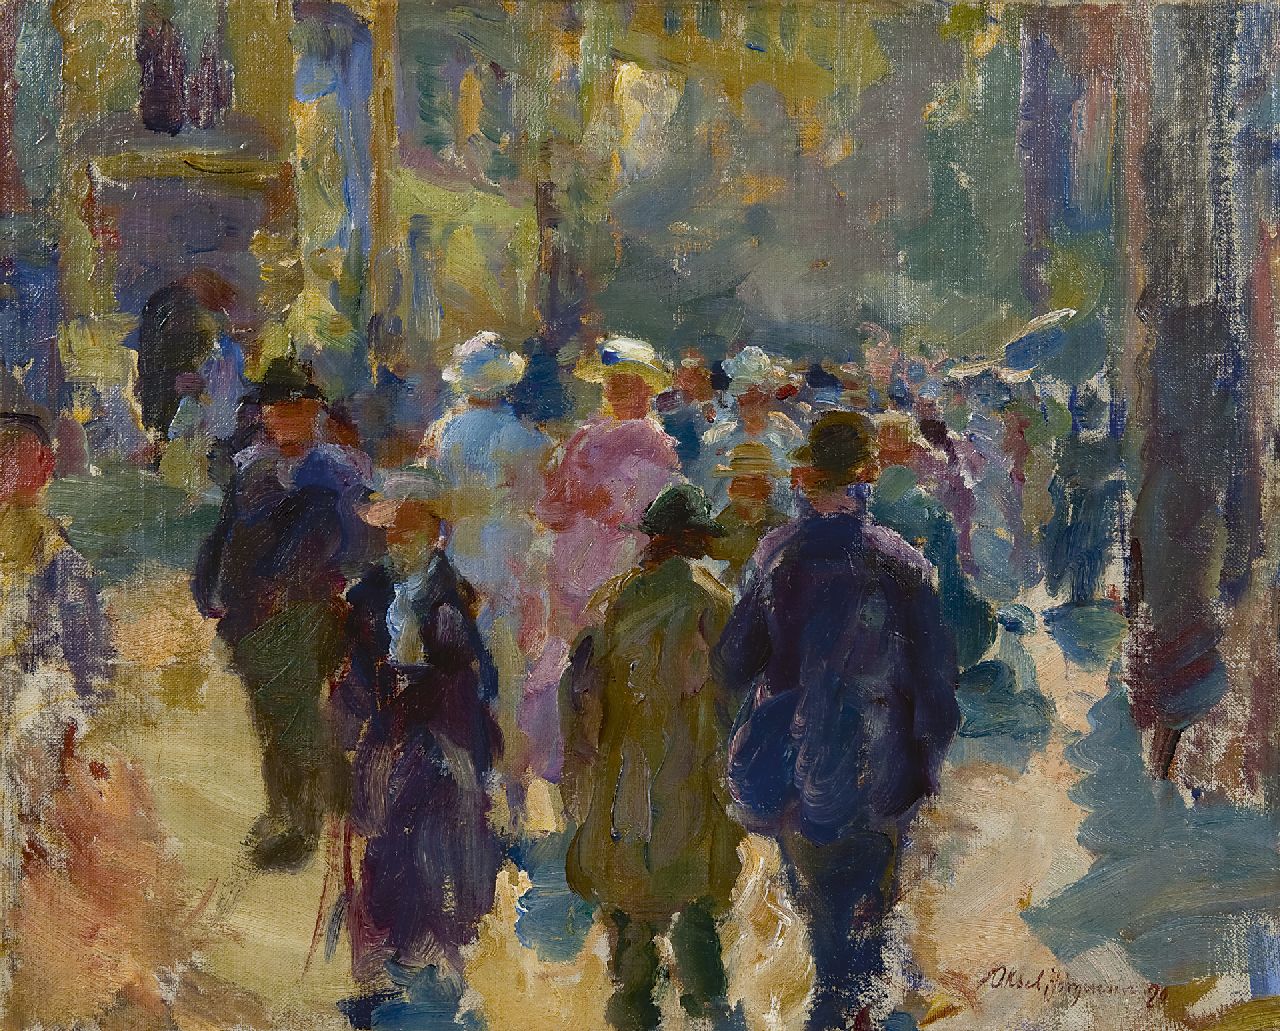 Aksel Jørgensen | Pedestrians in Vimmelskaftet, Copenhagen, oil on canvas, 41.8 x 52.1 cm, signed l.r. and dated '20